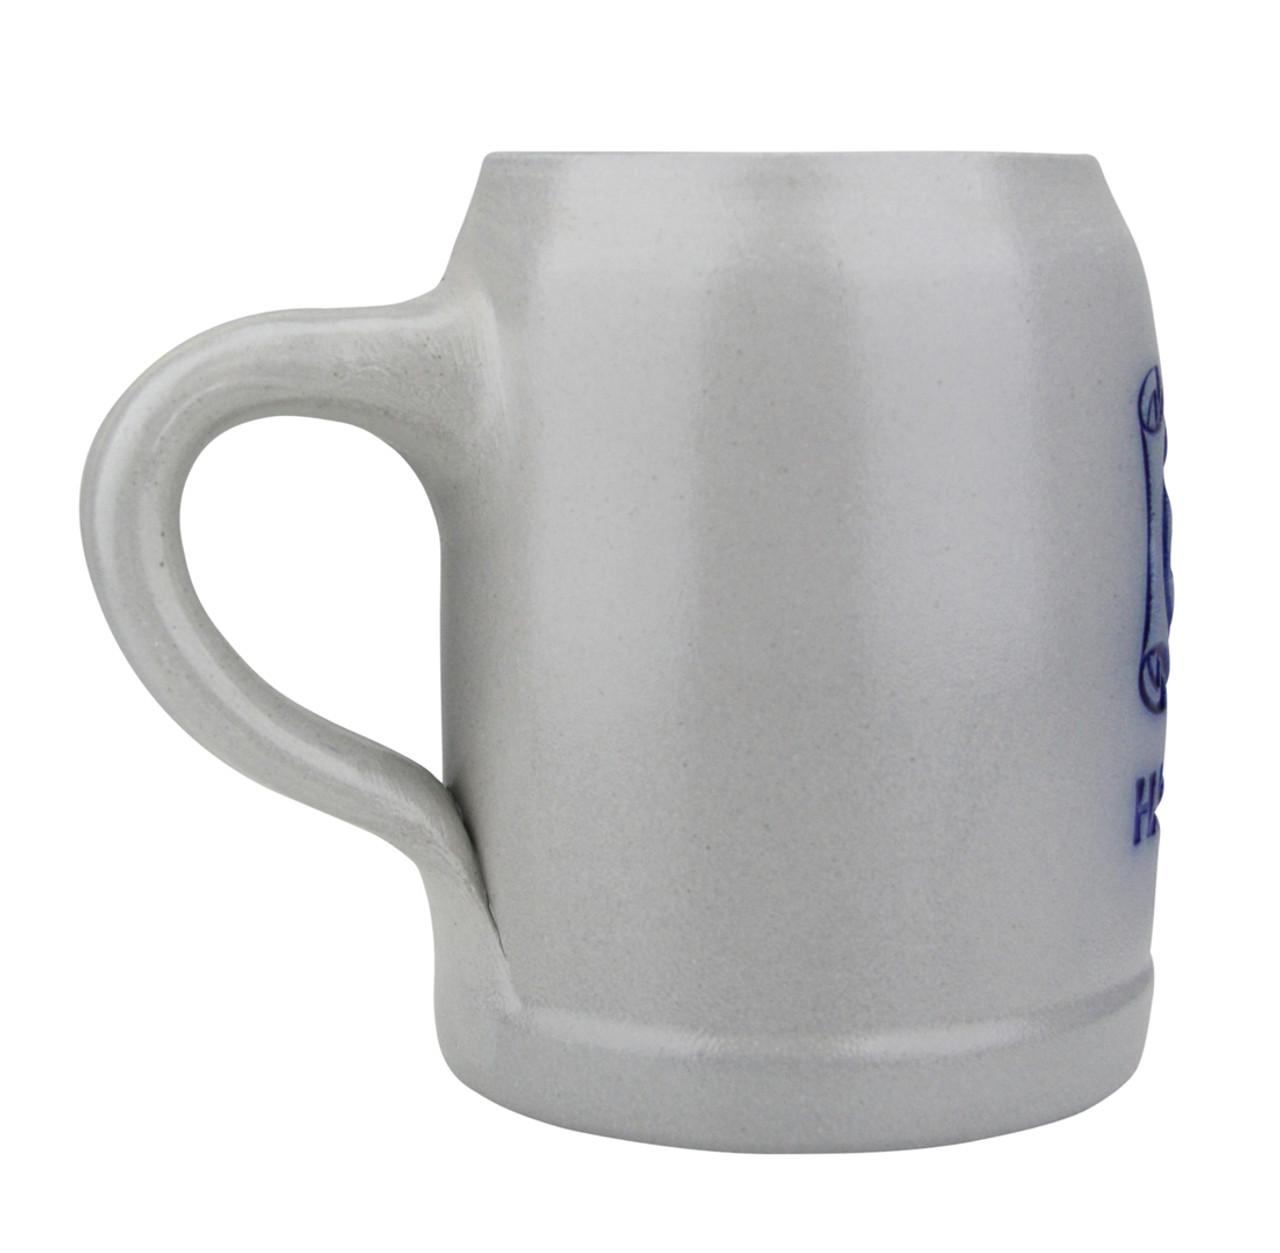 Hacker Pschorr Brewery 0.5 Liter Salt Glaze Stoneware Beer Mug